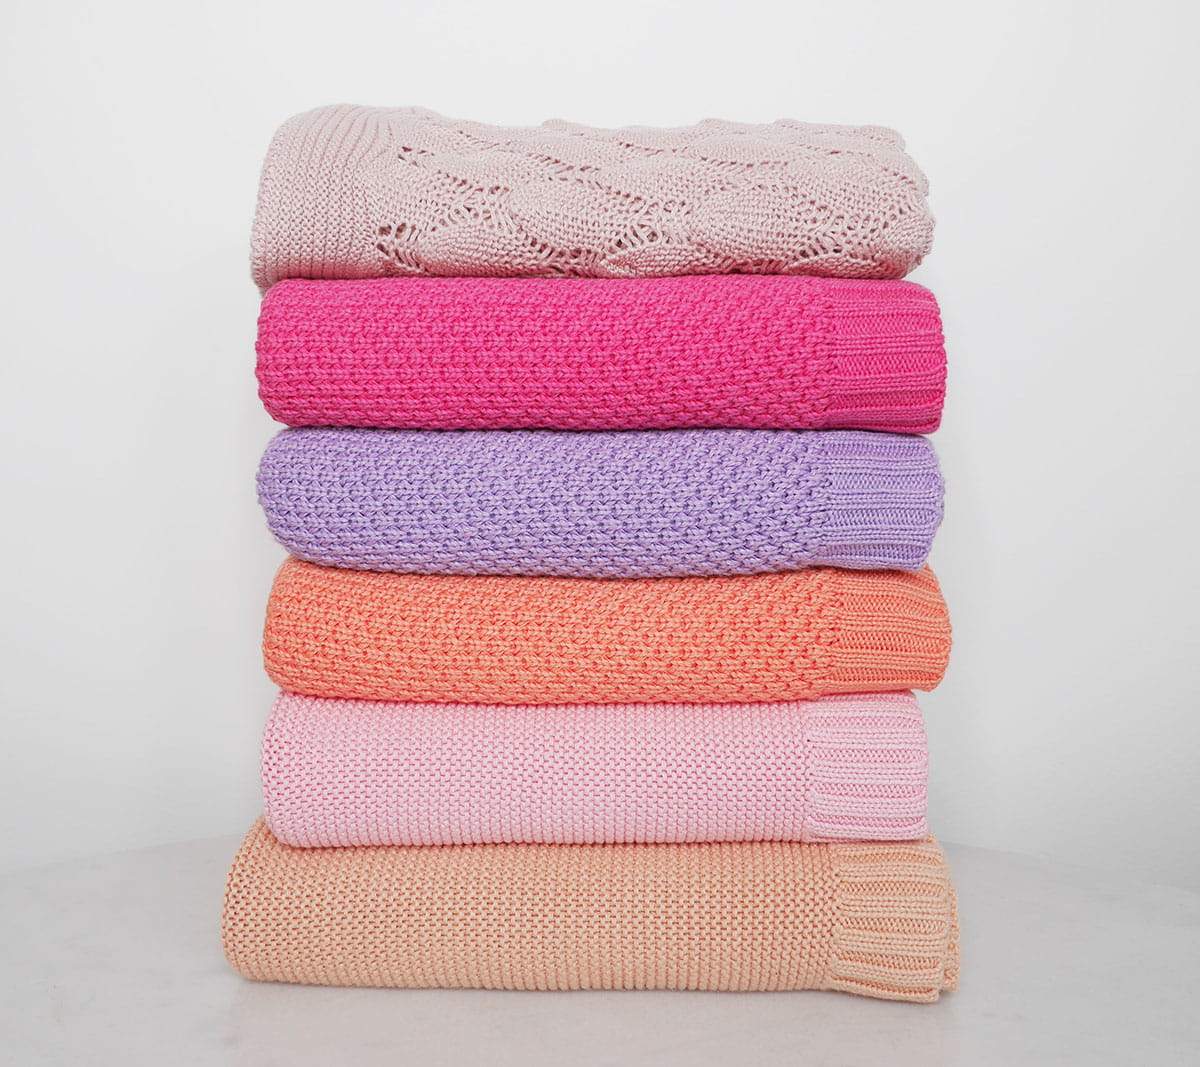 Bamboo baby blanket - Peach - Classic knit Blanket Lullalove UK 